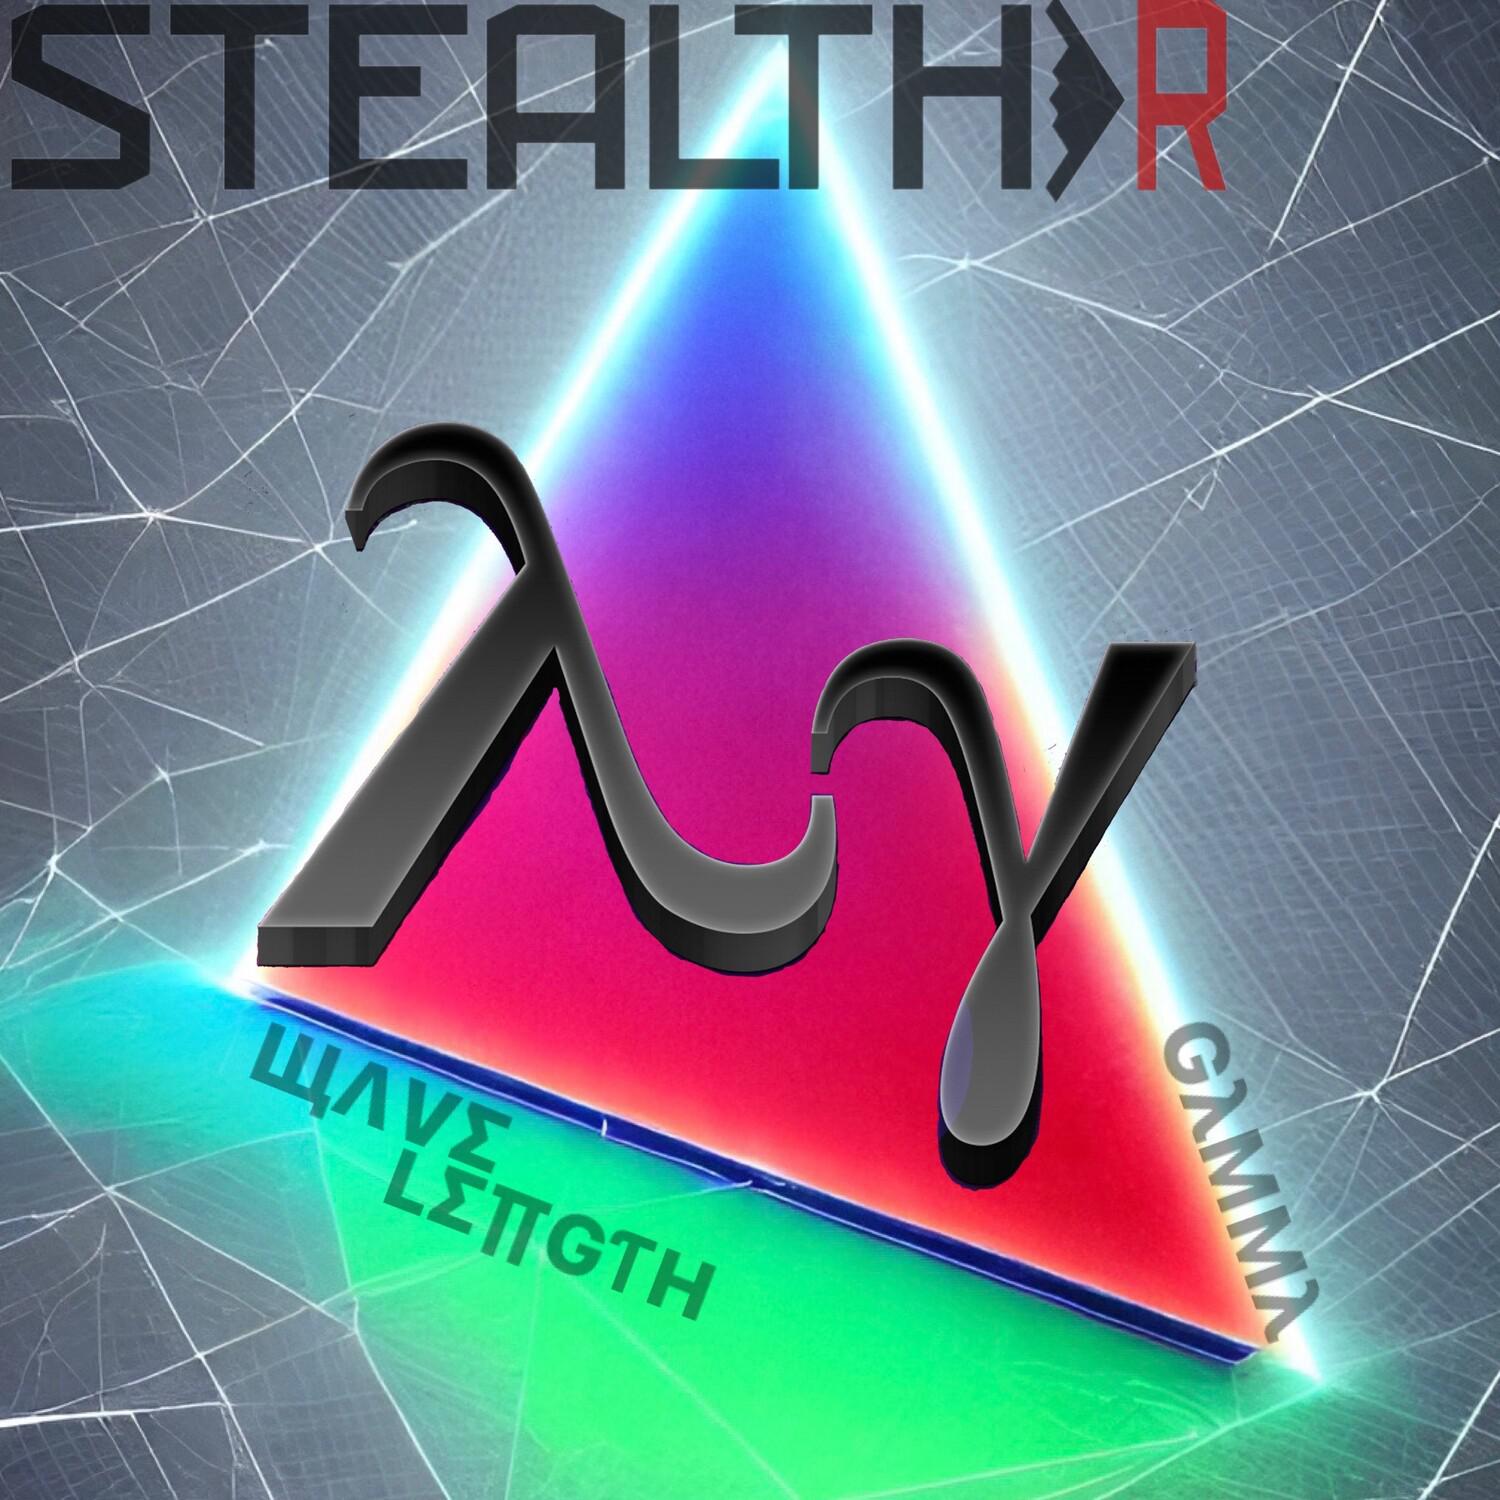 Stealthr - My Way